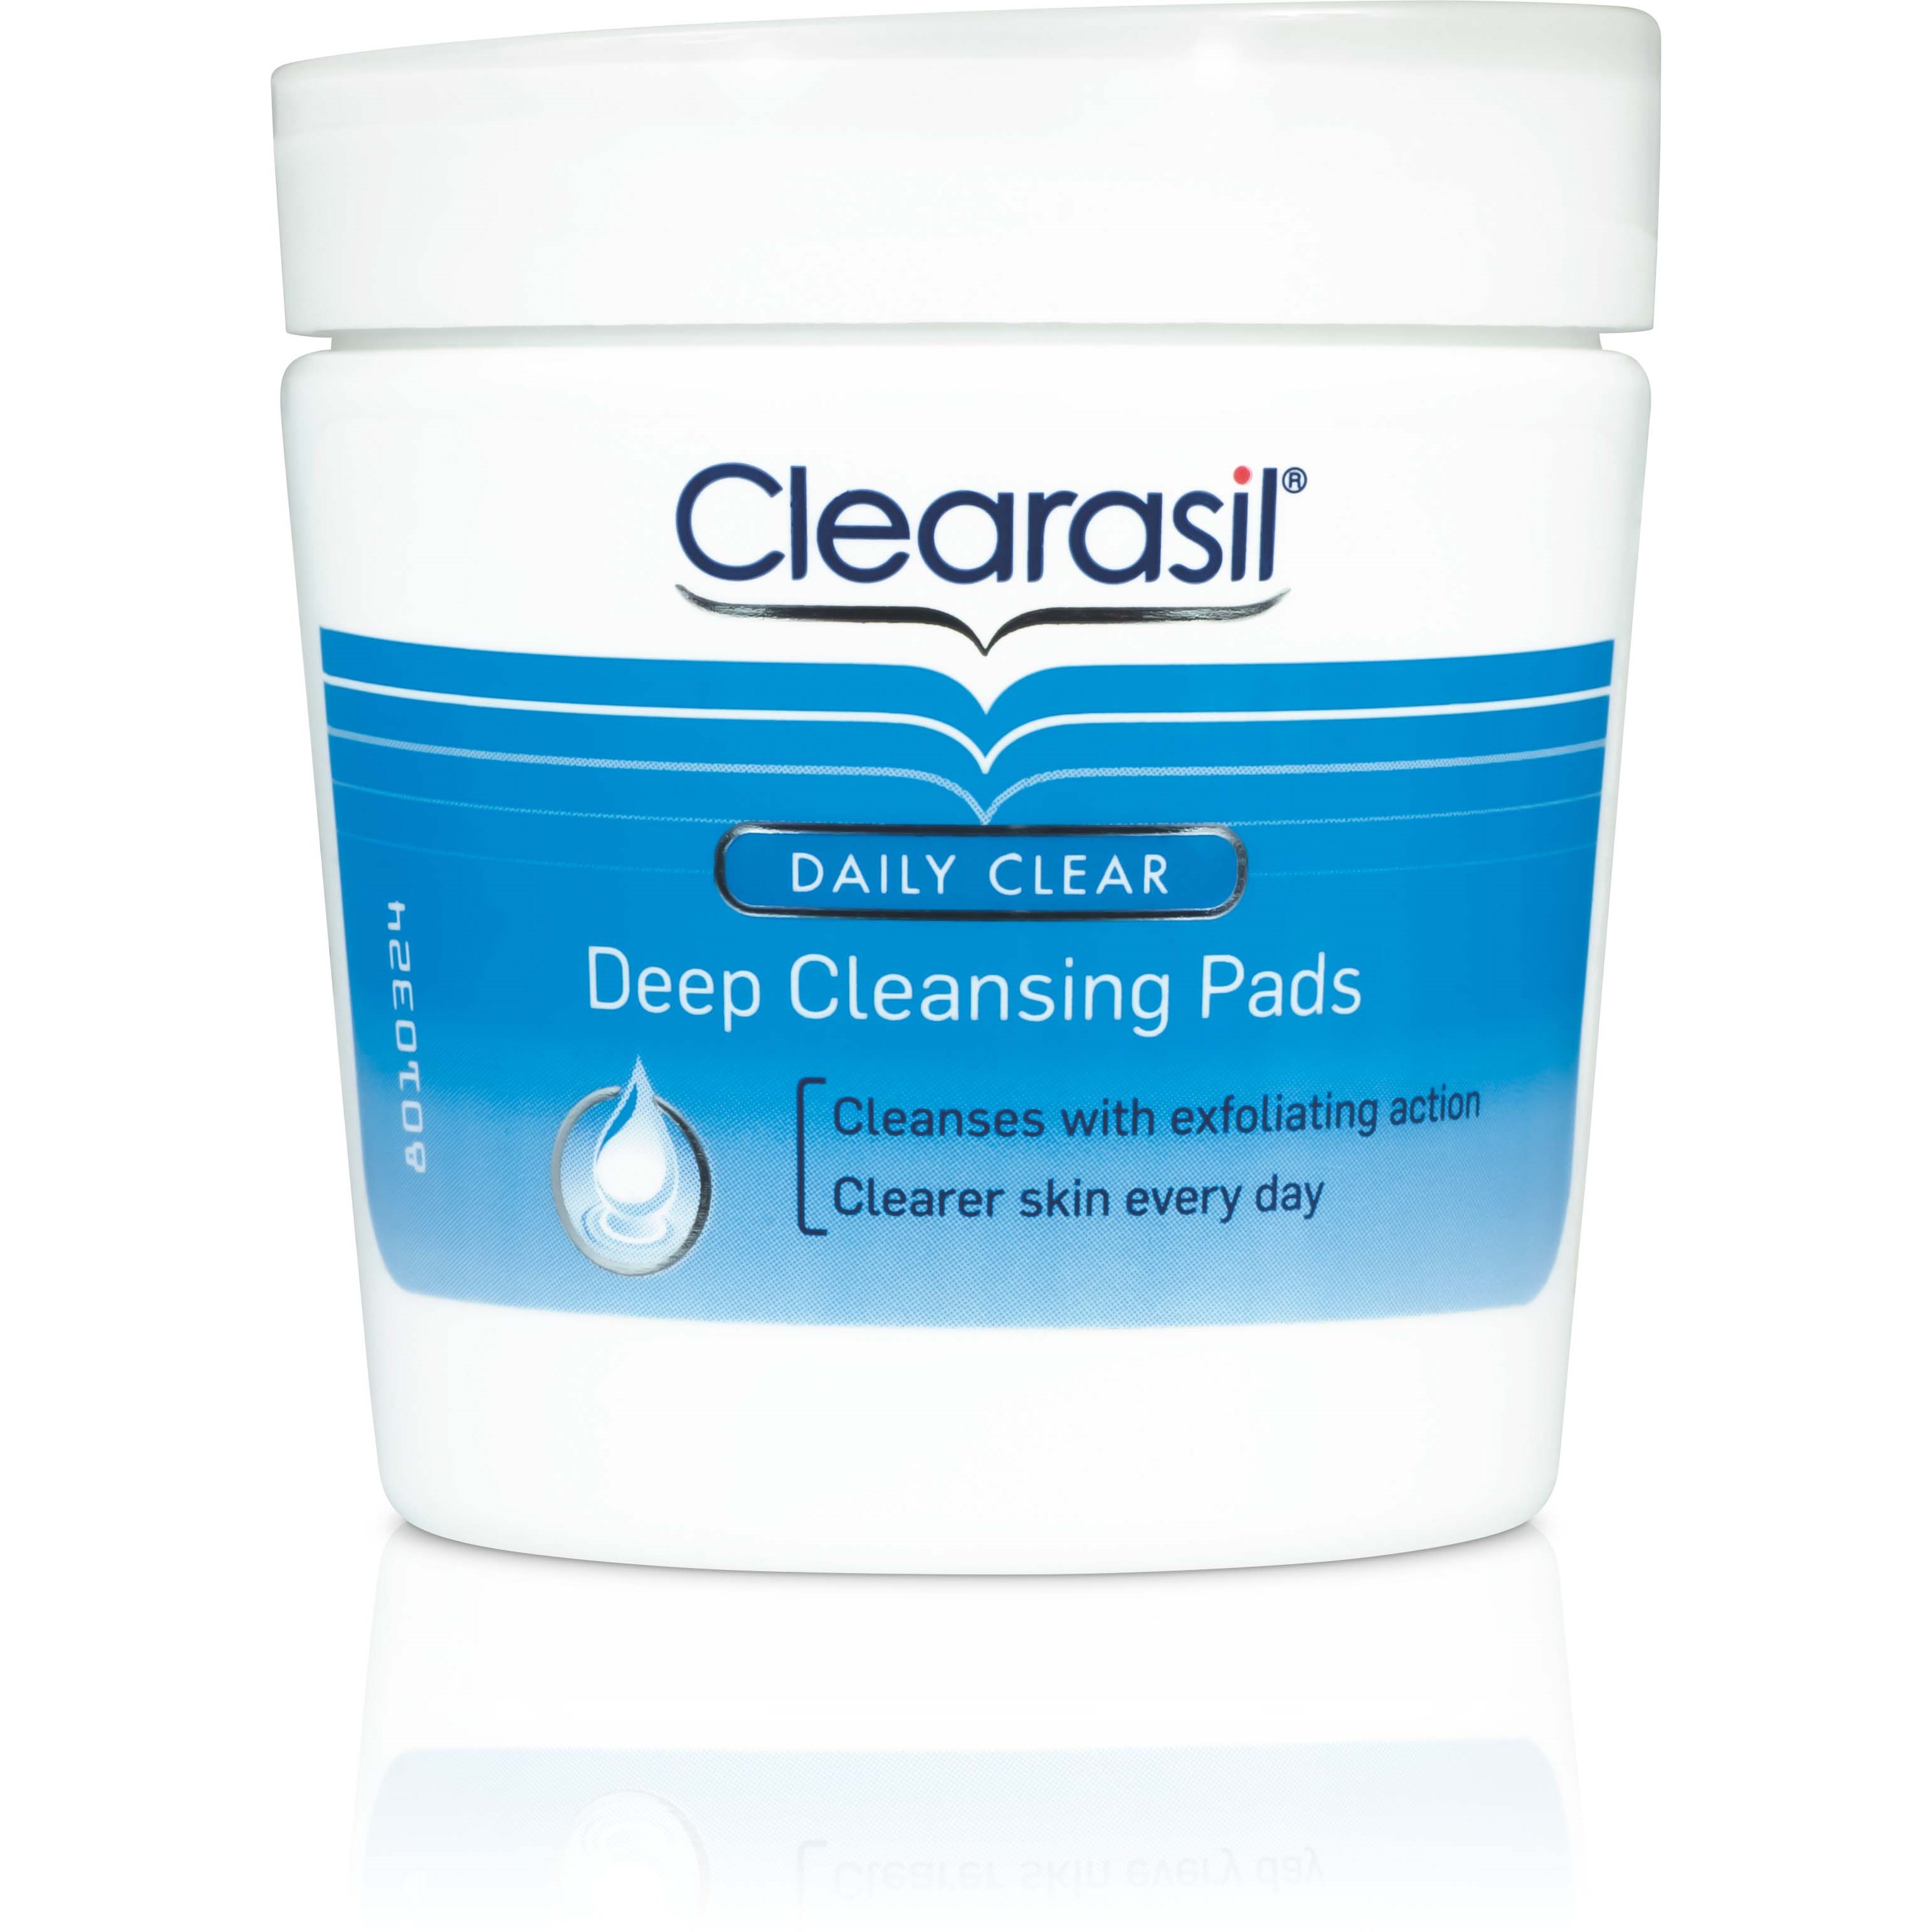 Bilde av Clearasil Daily Clear Deep Cleansing Pads